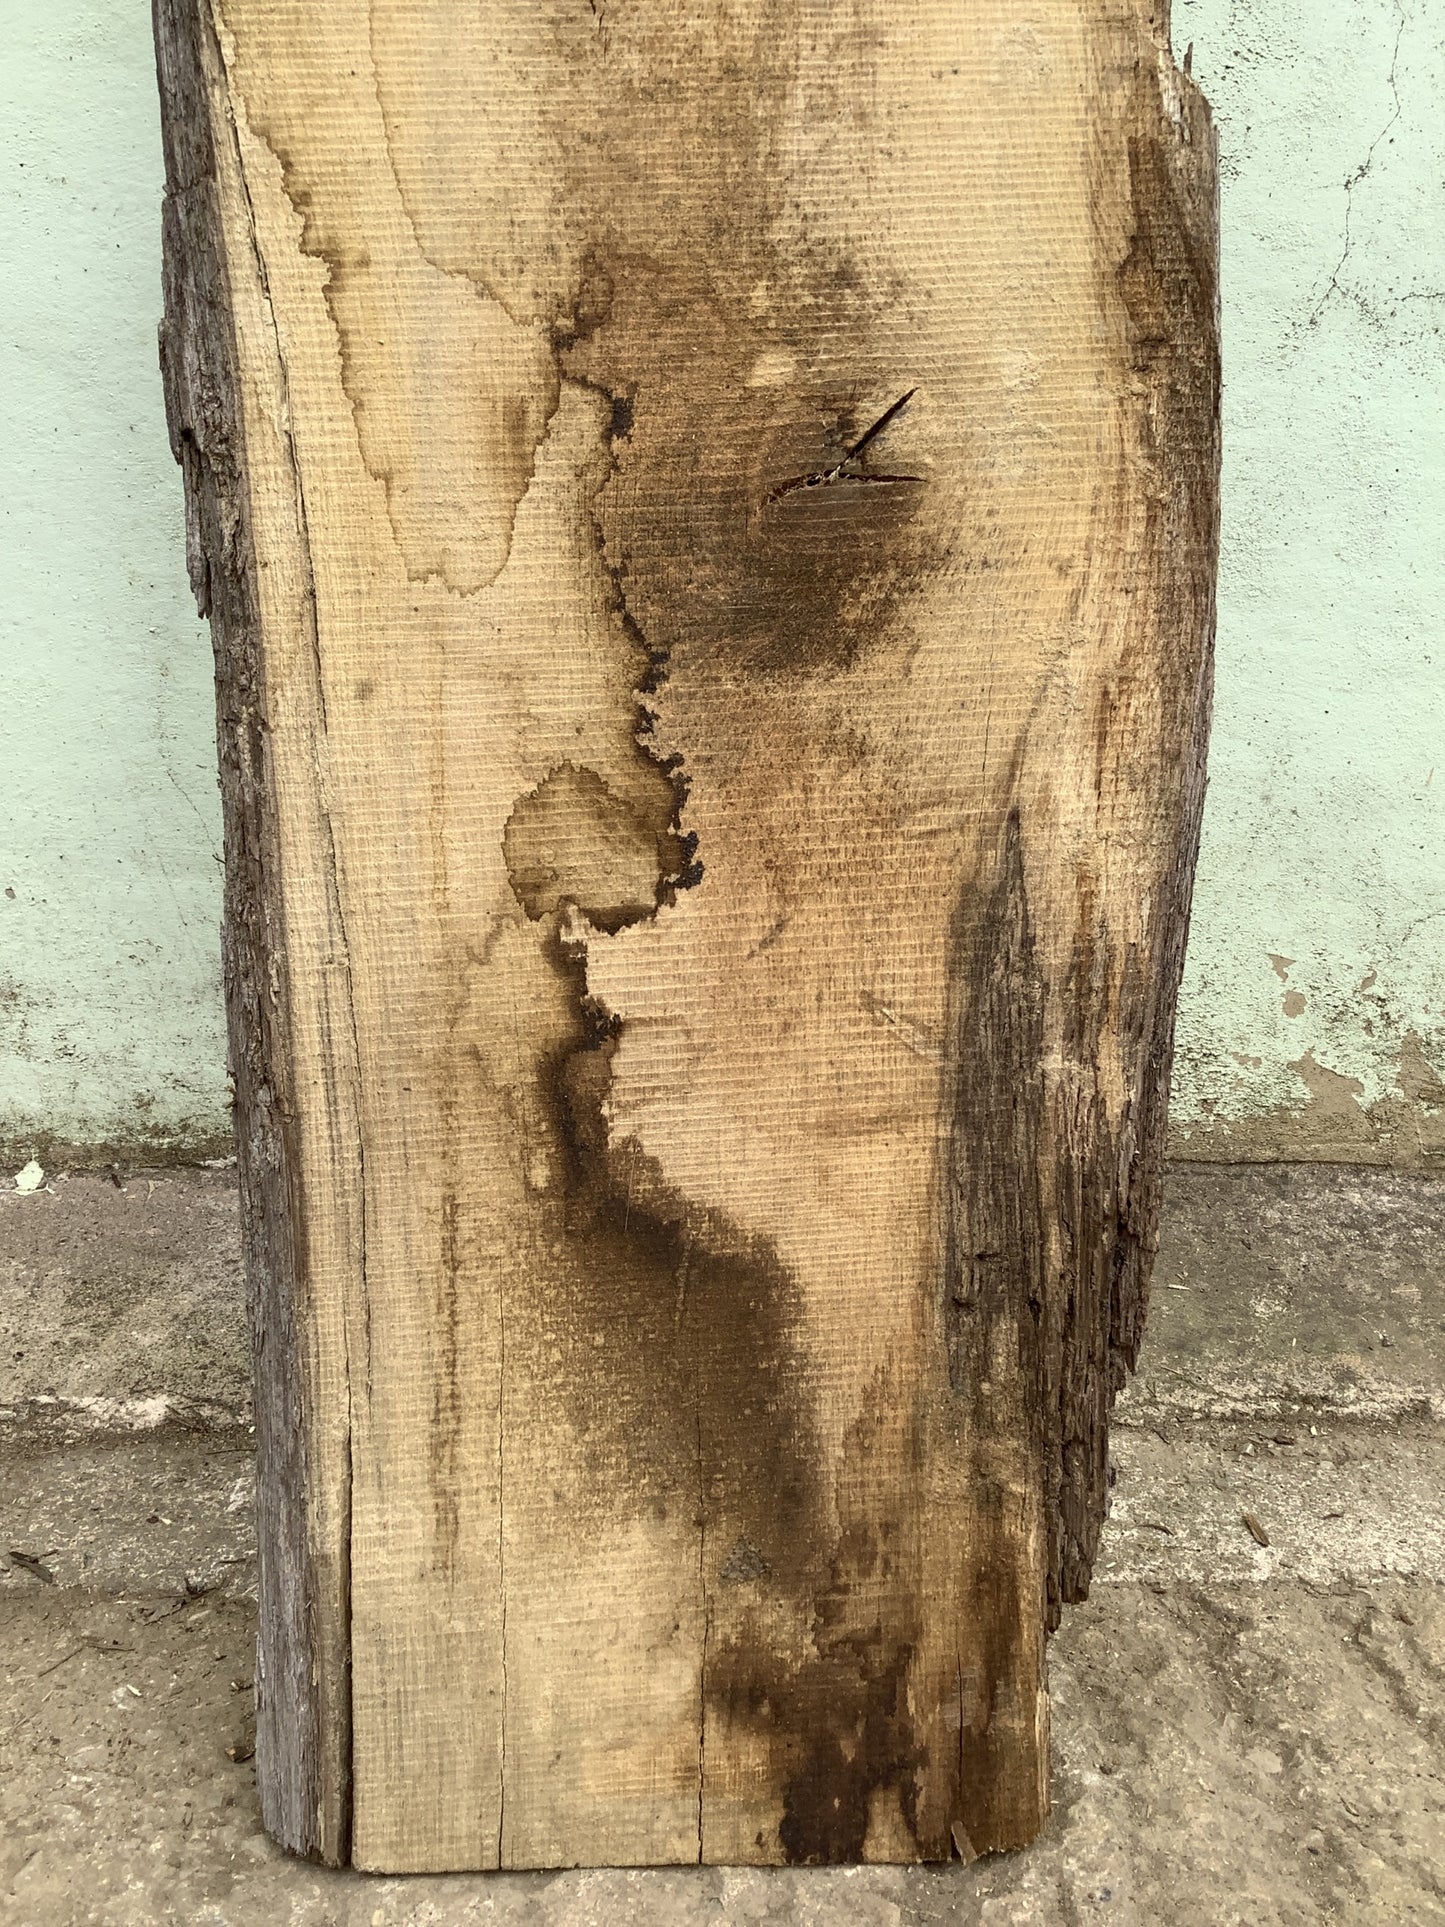 7'11" L Live Waney Edge Rustic Solid Oak Air Dried Hardwood Timber Board